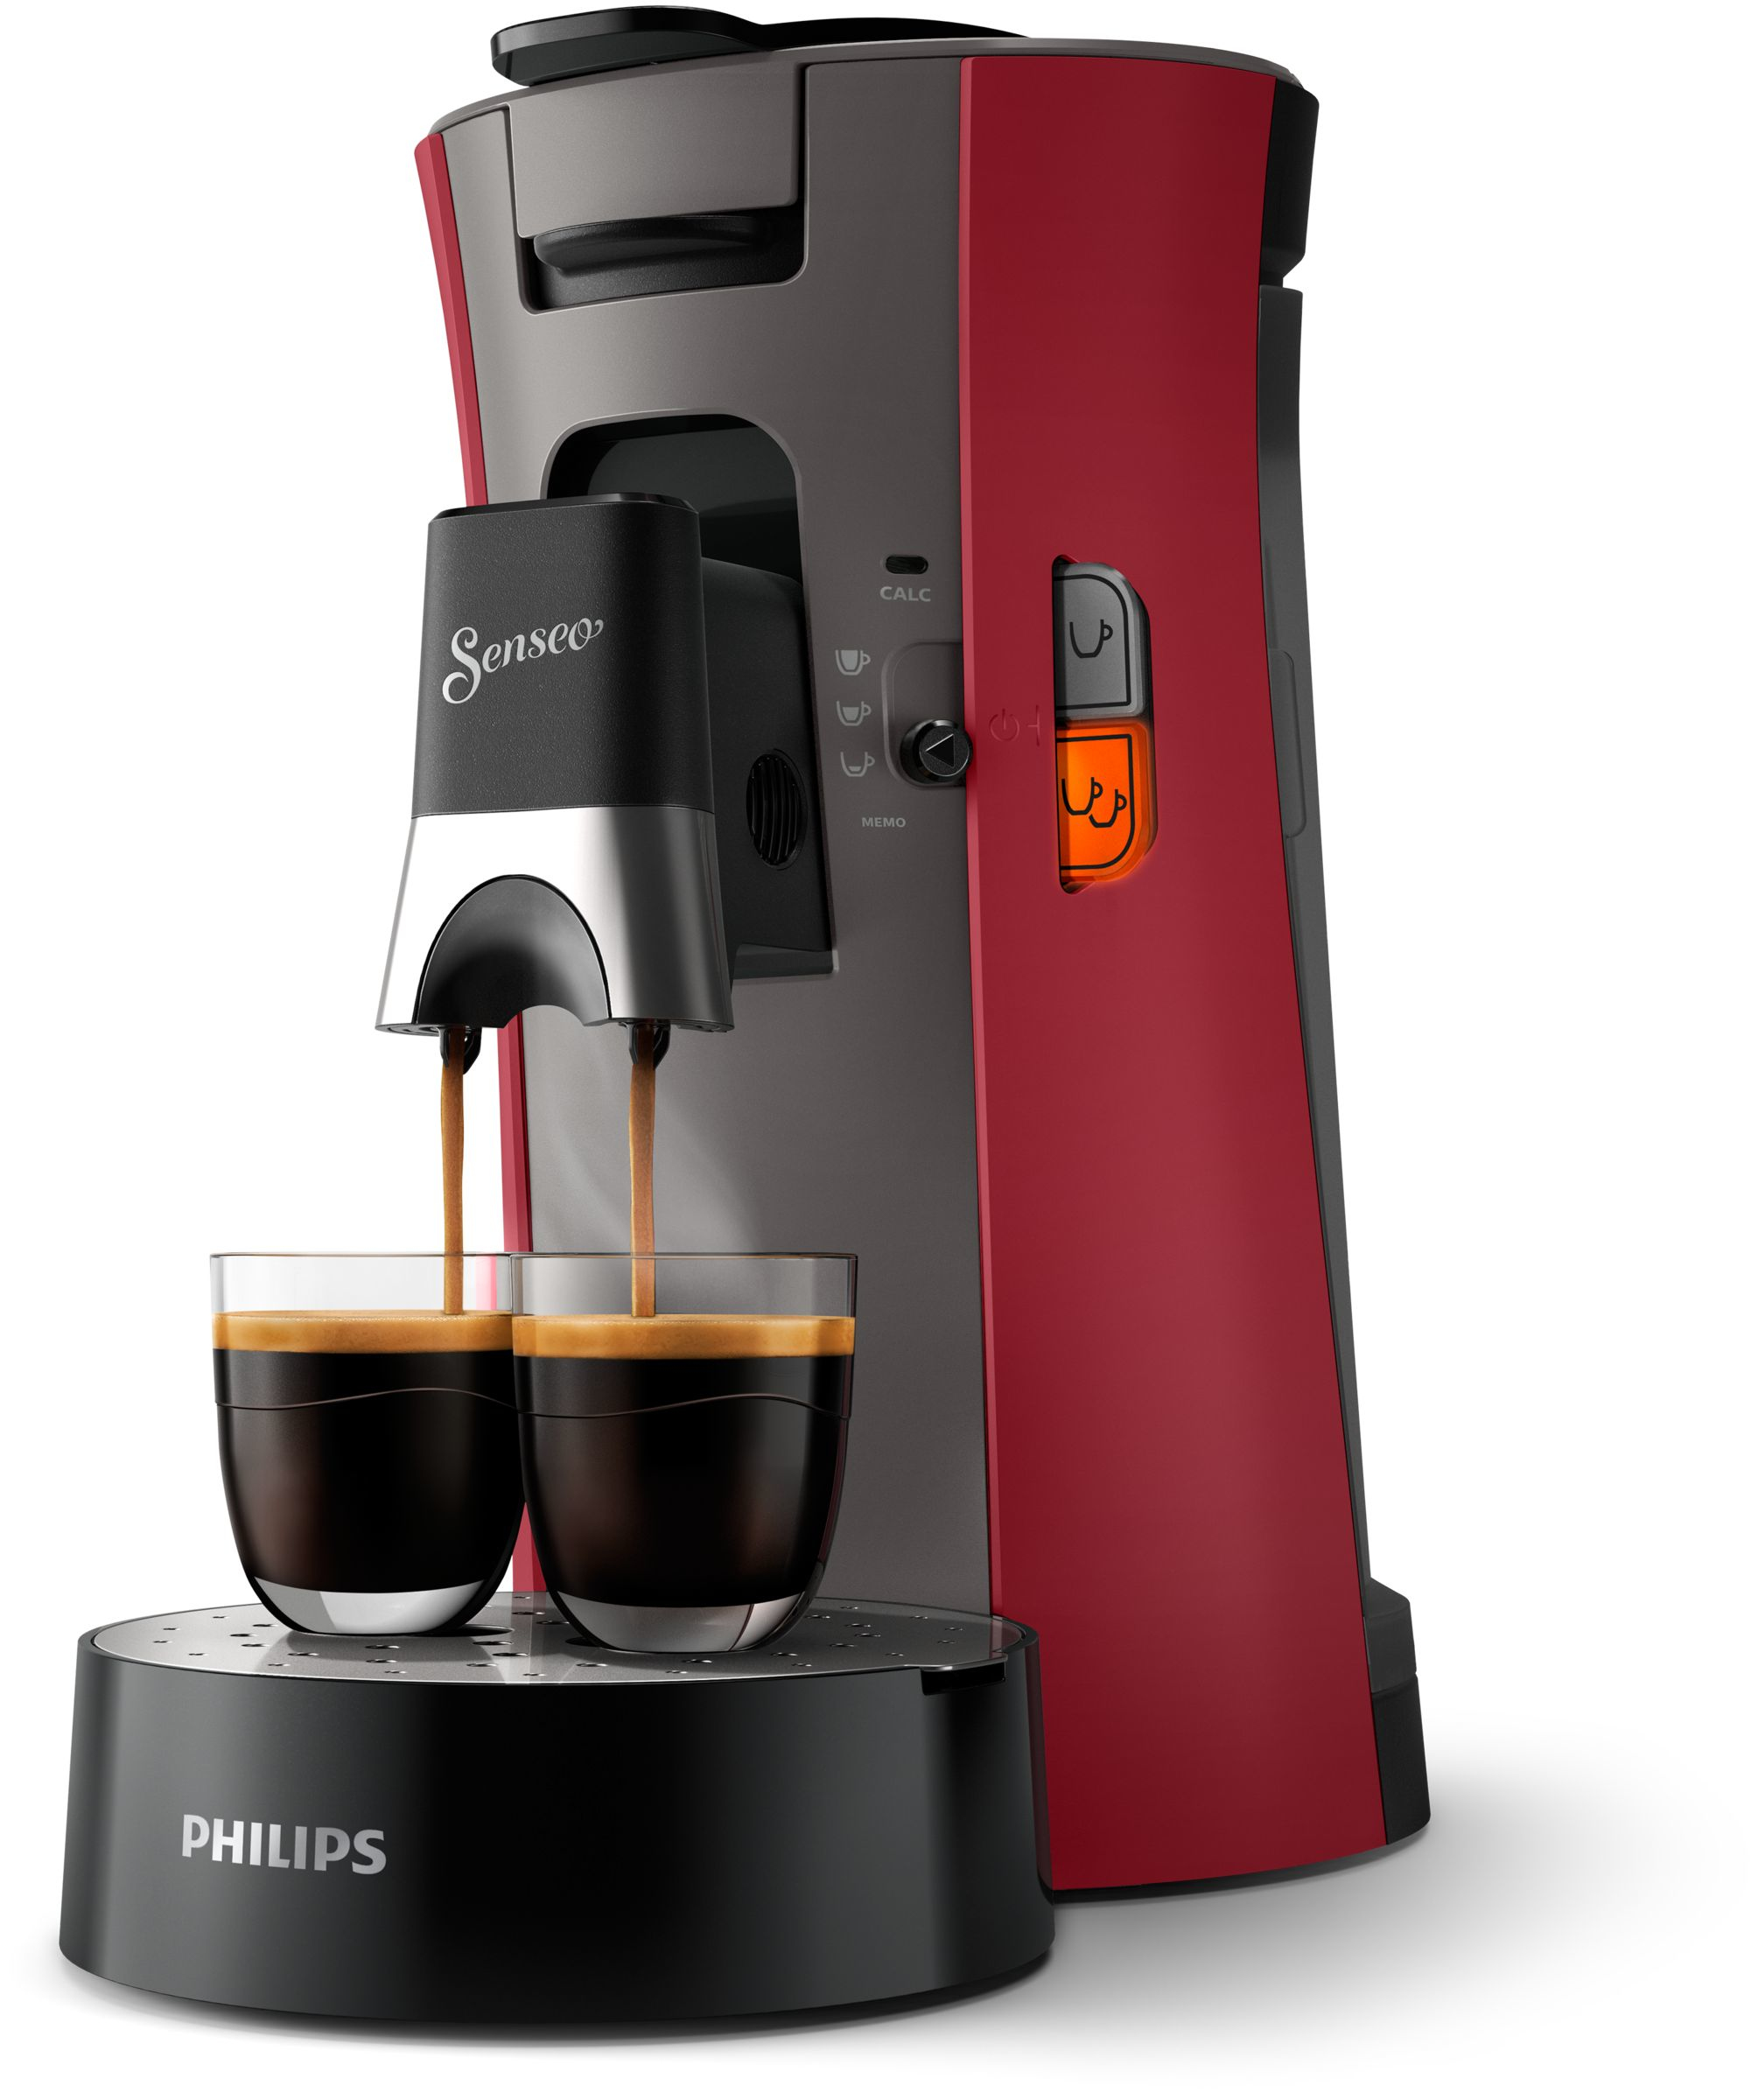 Philips Senseo CSA240/91 coffee maker